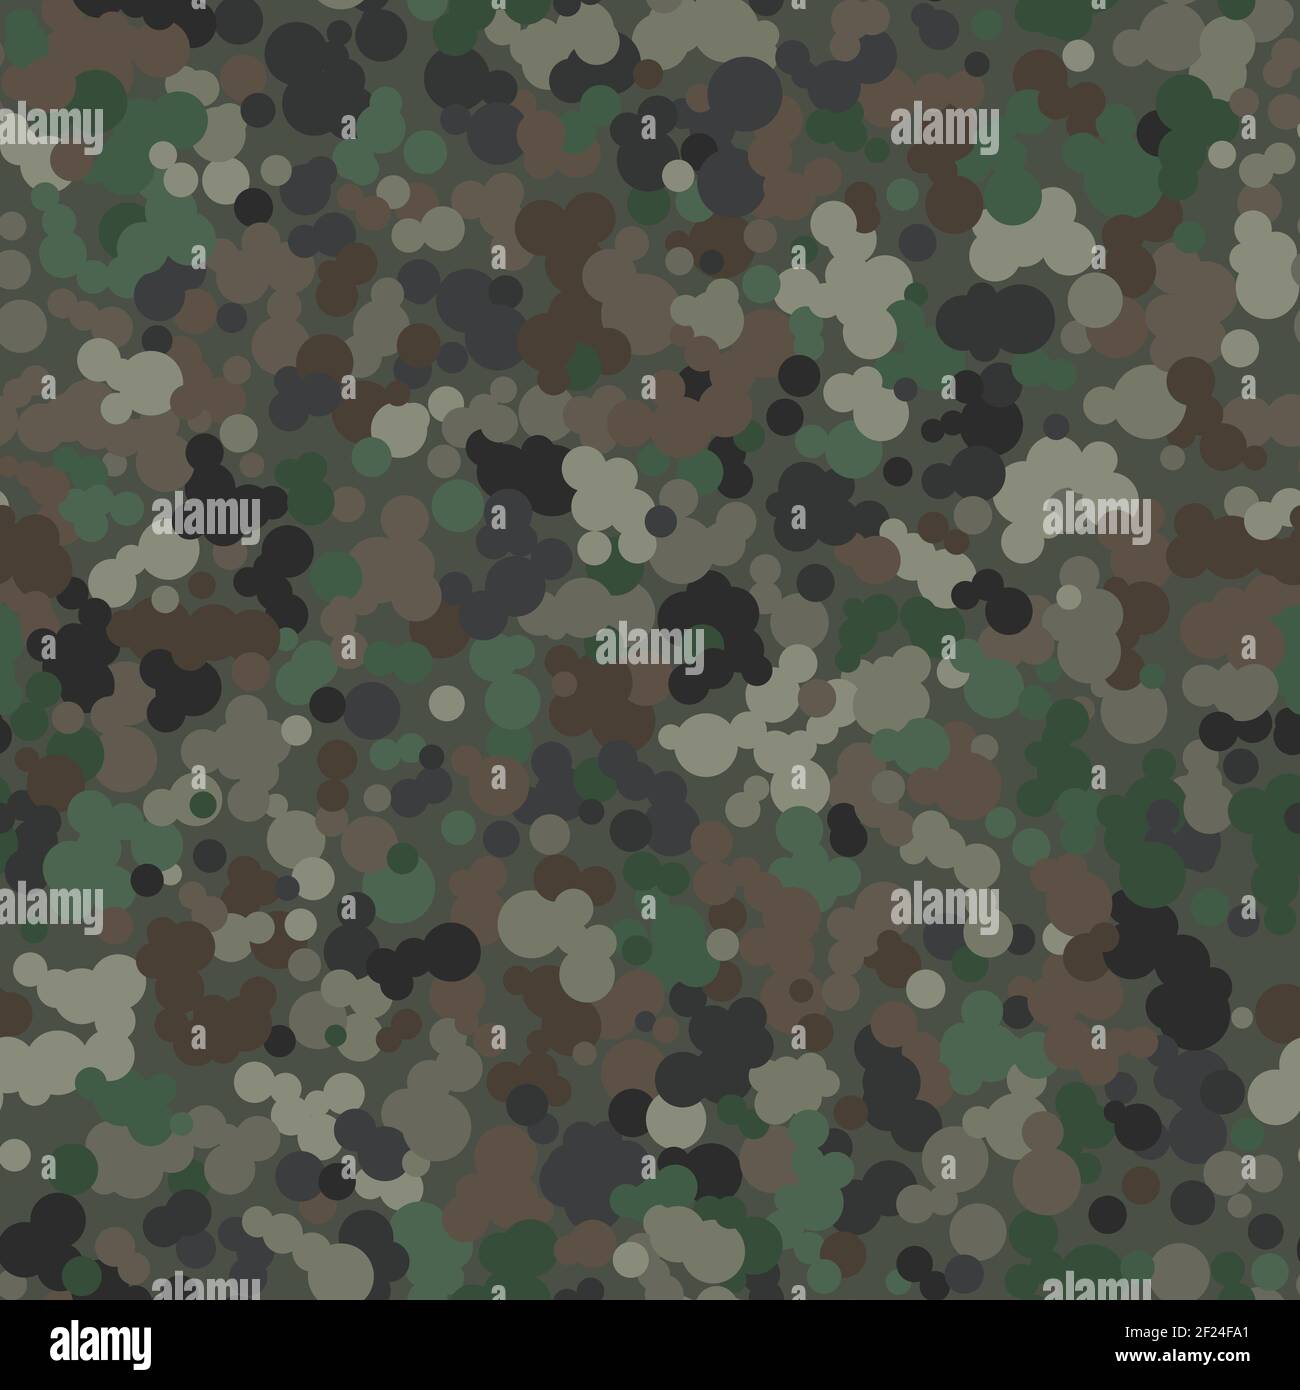 Military camouflage seamless pattern background Stock Photo - Alamy